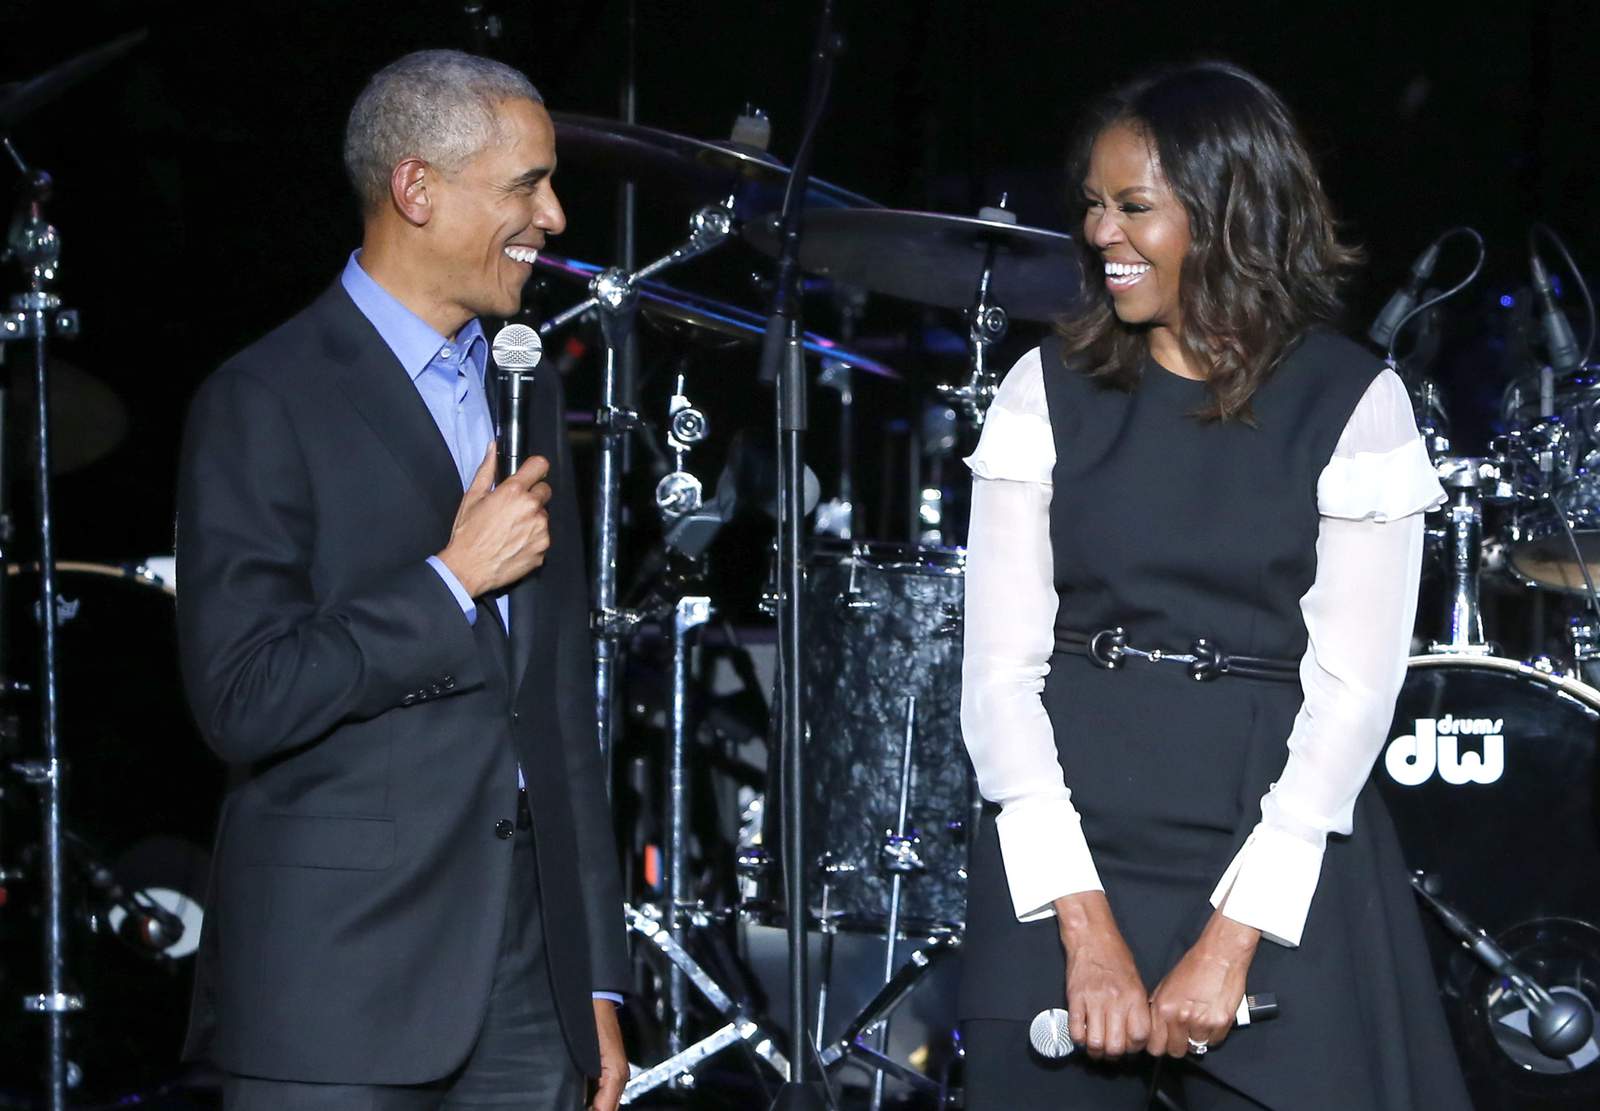 Barack Obama to appear on Michelle Obama's podcast debut